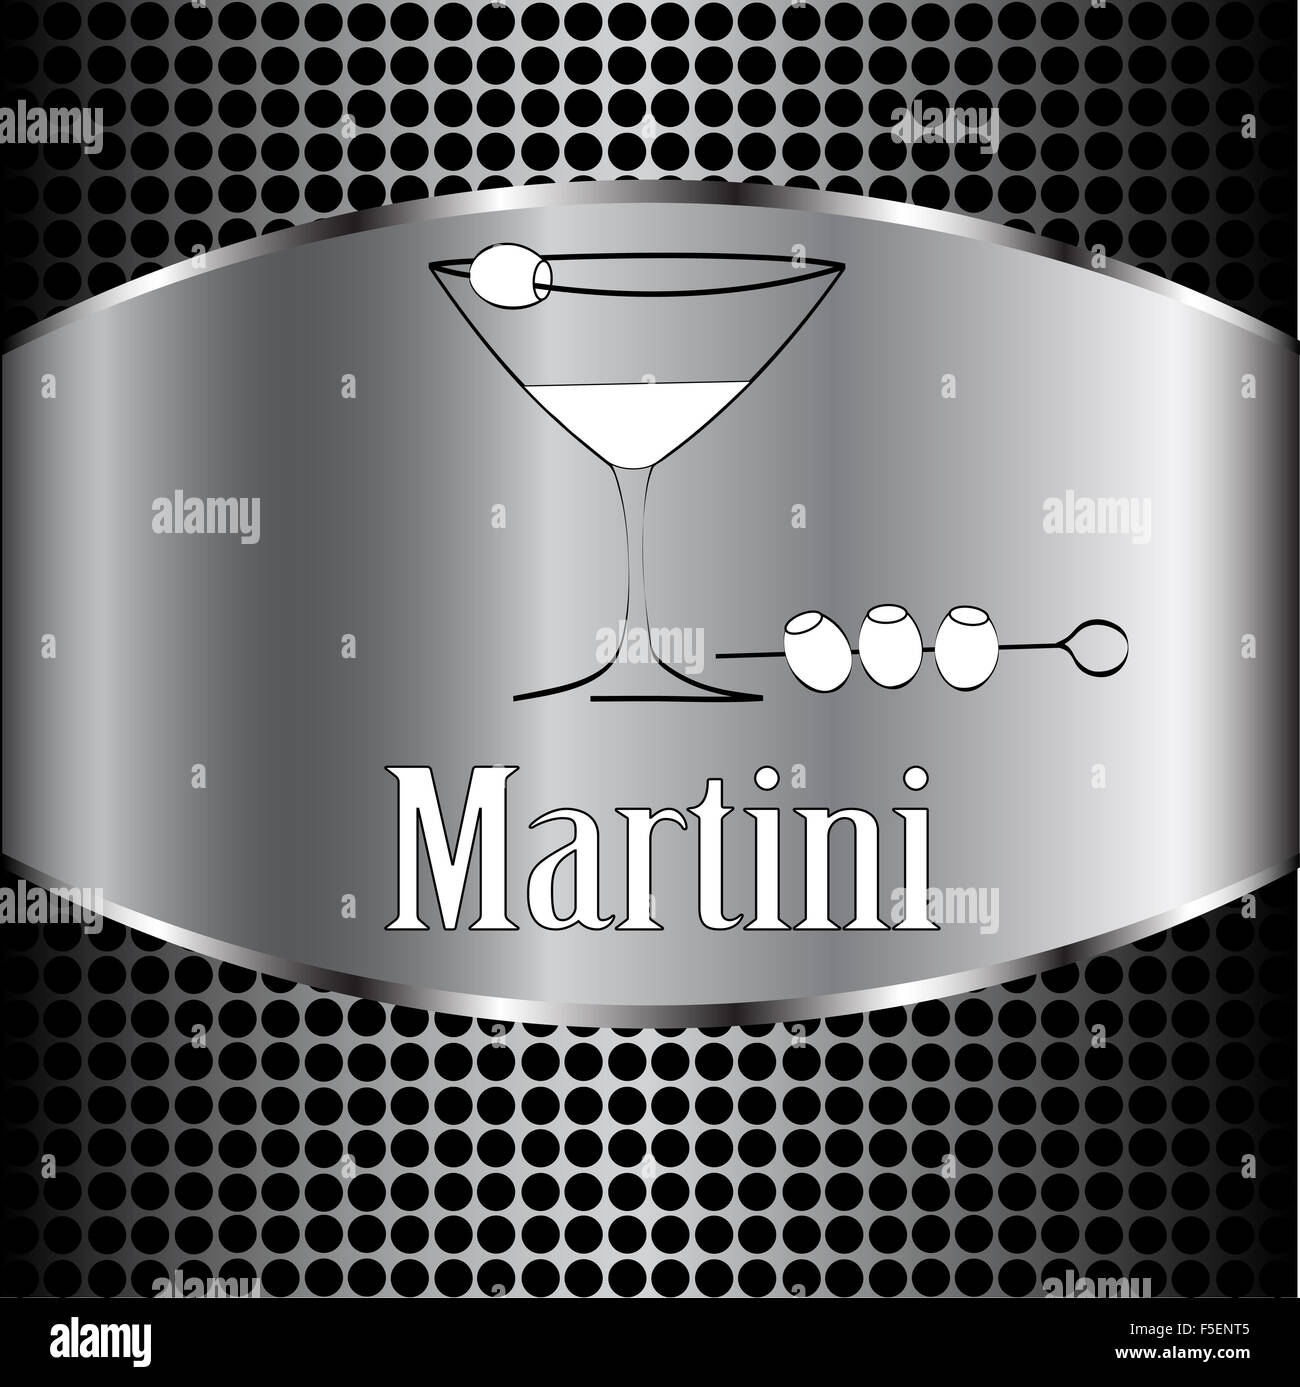 Martini glass design menu background. Vector Stock Photo